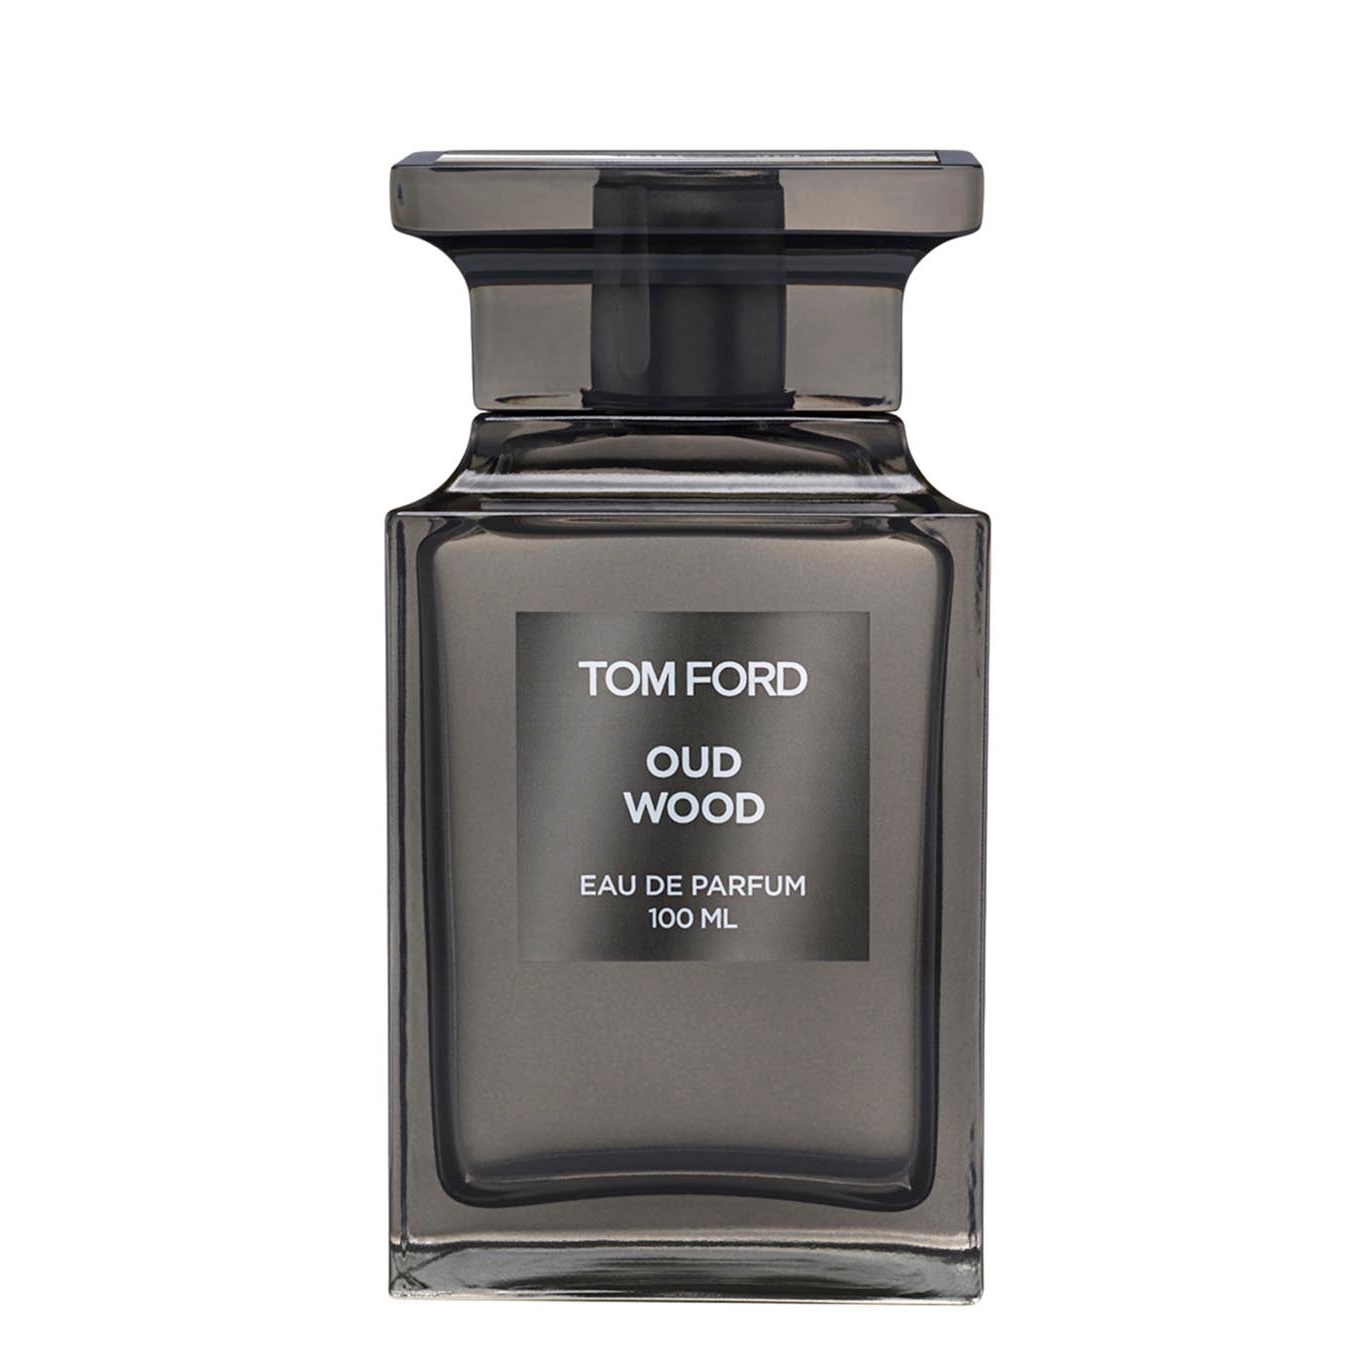 Tom Ford Oud Wood Eau De Parfum 100ml